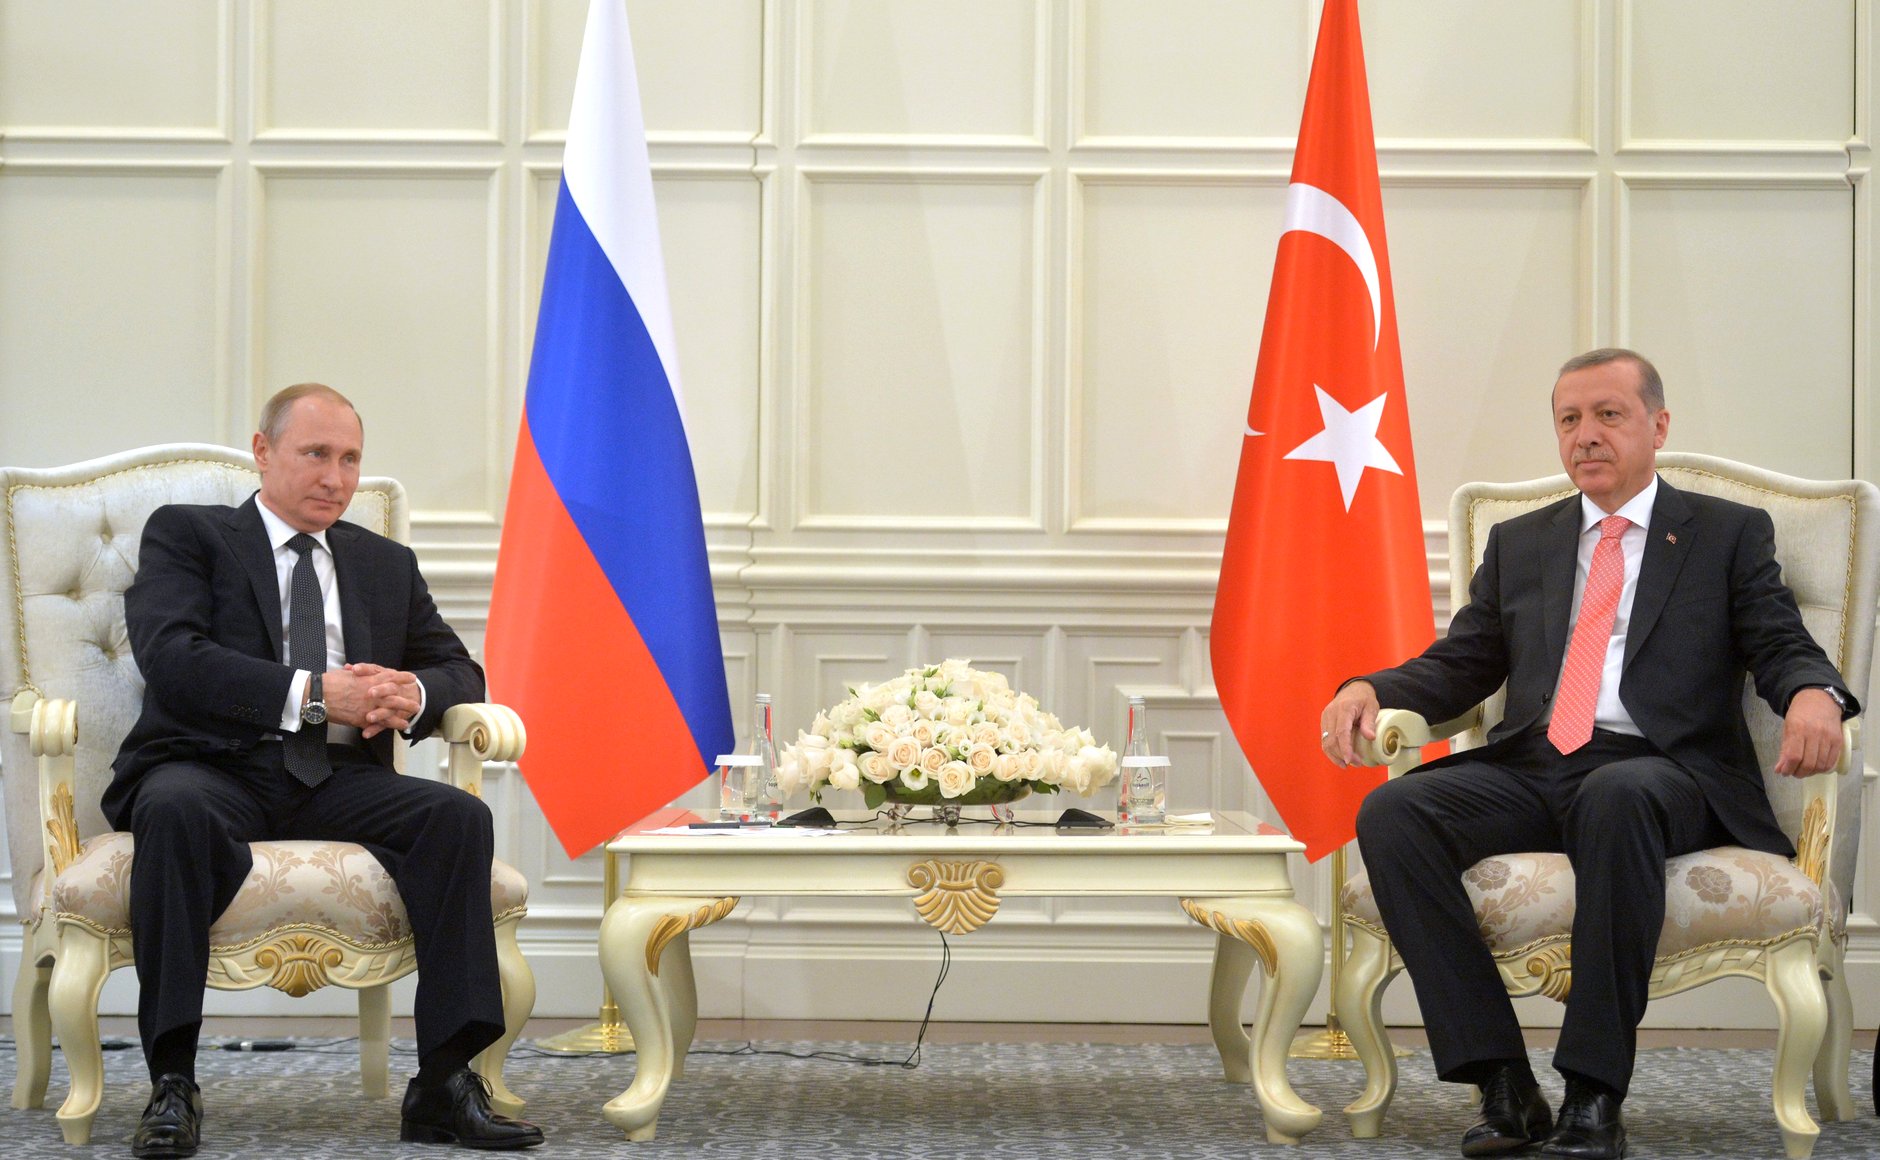 President of Russia, Vladimir Putin, meets with President of Turkey, Recap Tayyip Erdoğan in Moscow in June 2013.